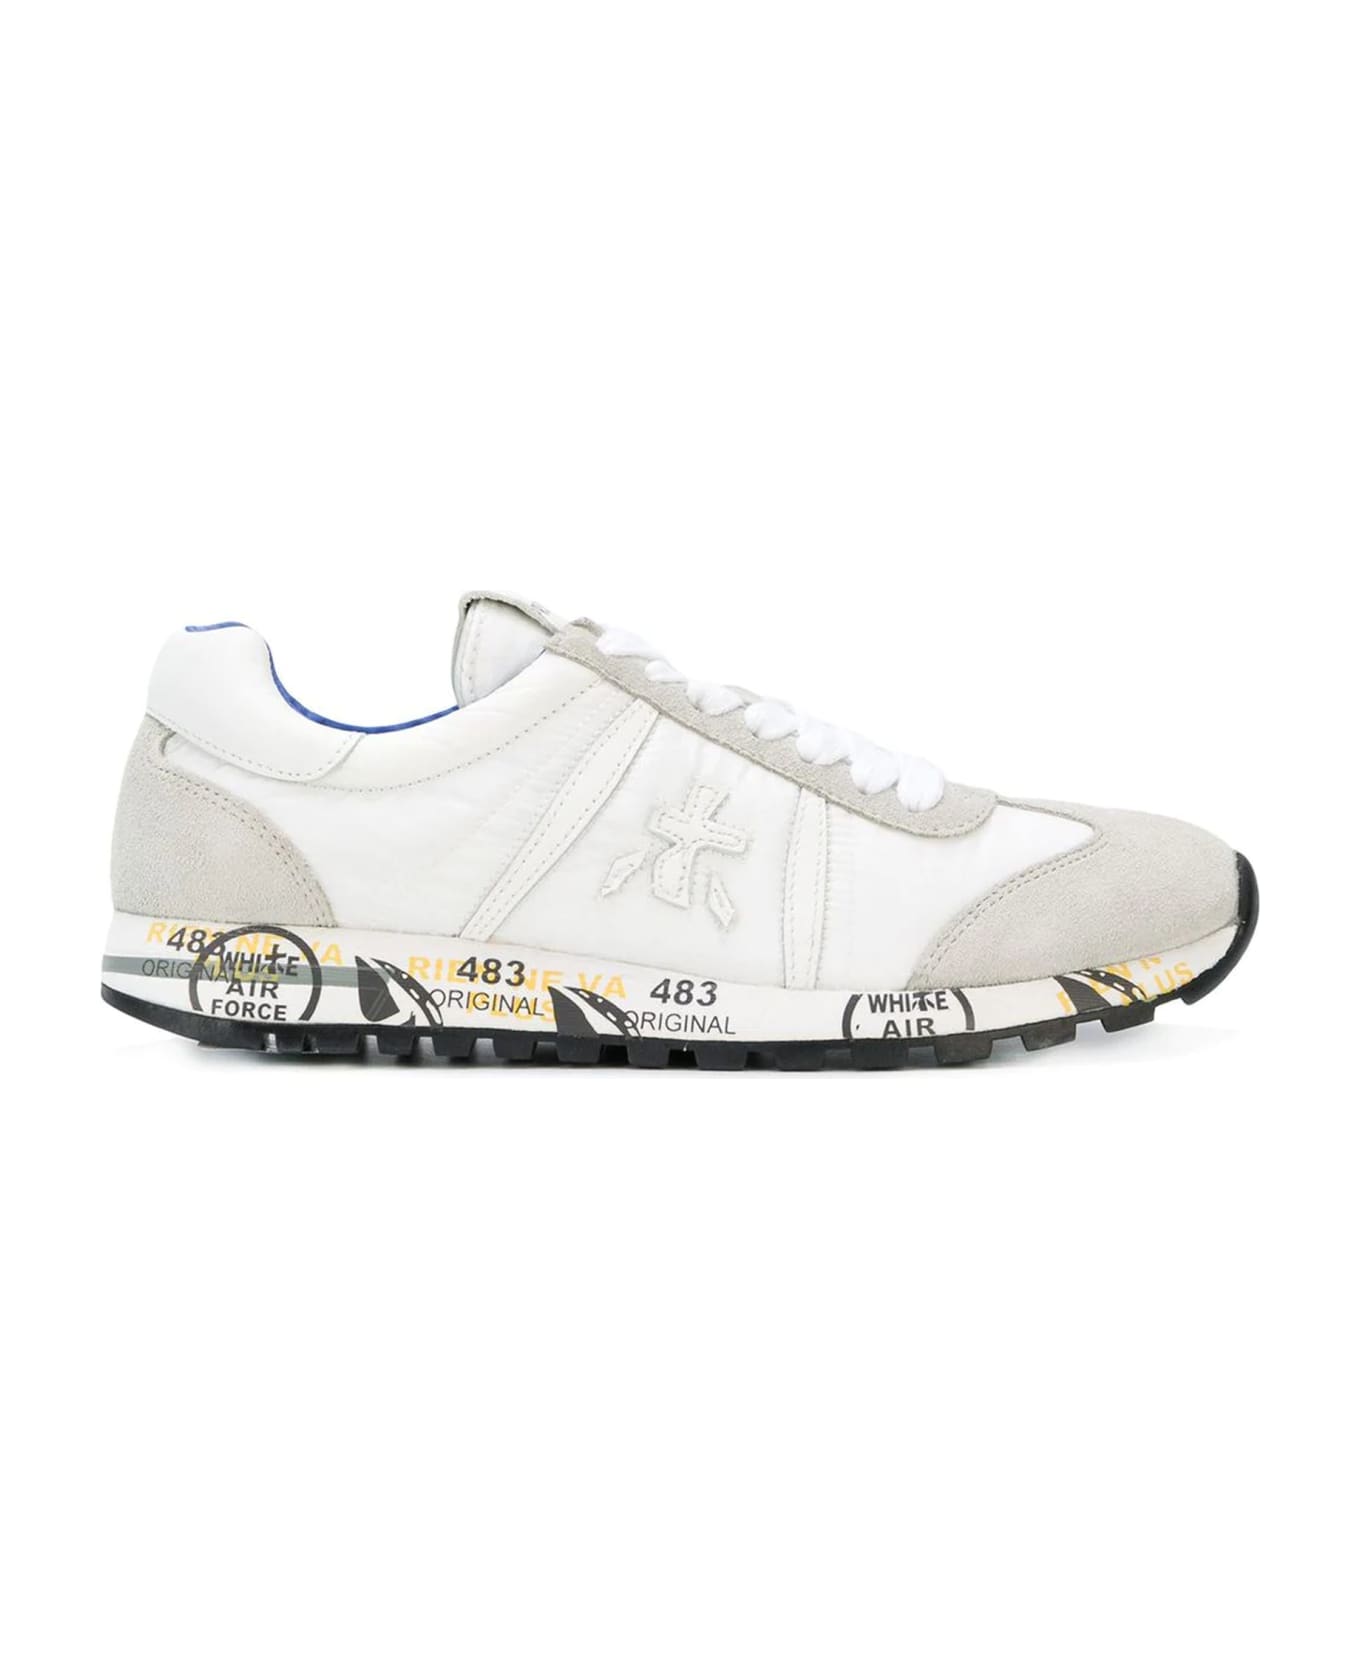 Premiata Lucy Sneakers - White スニーカー